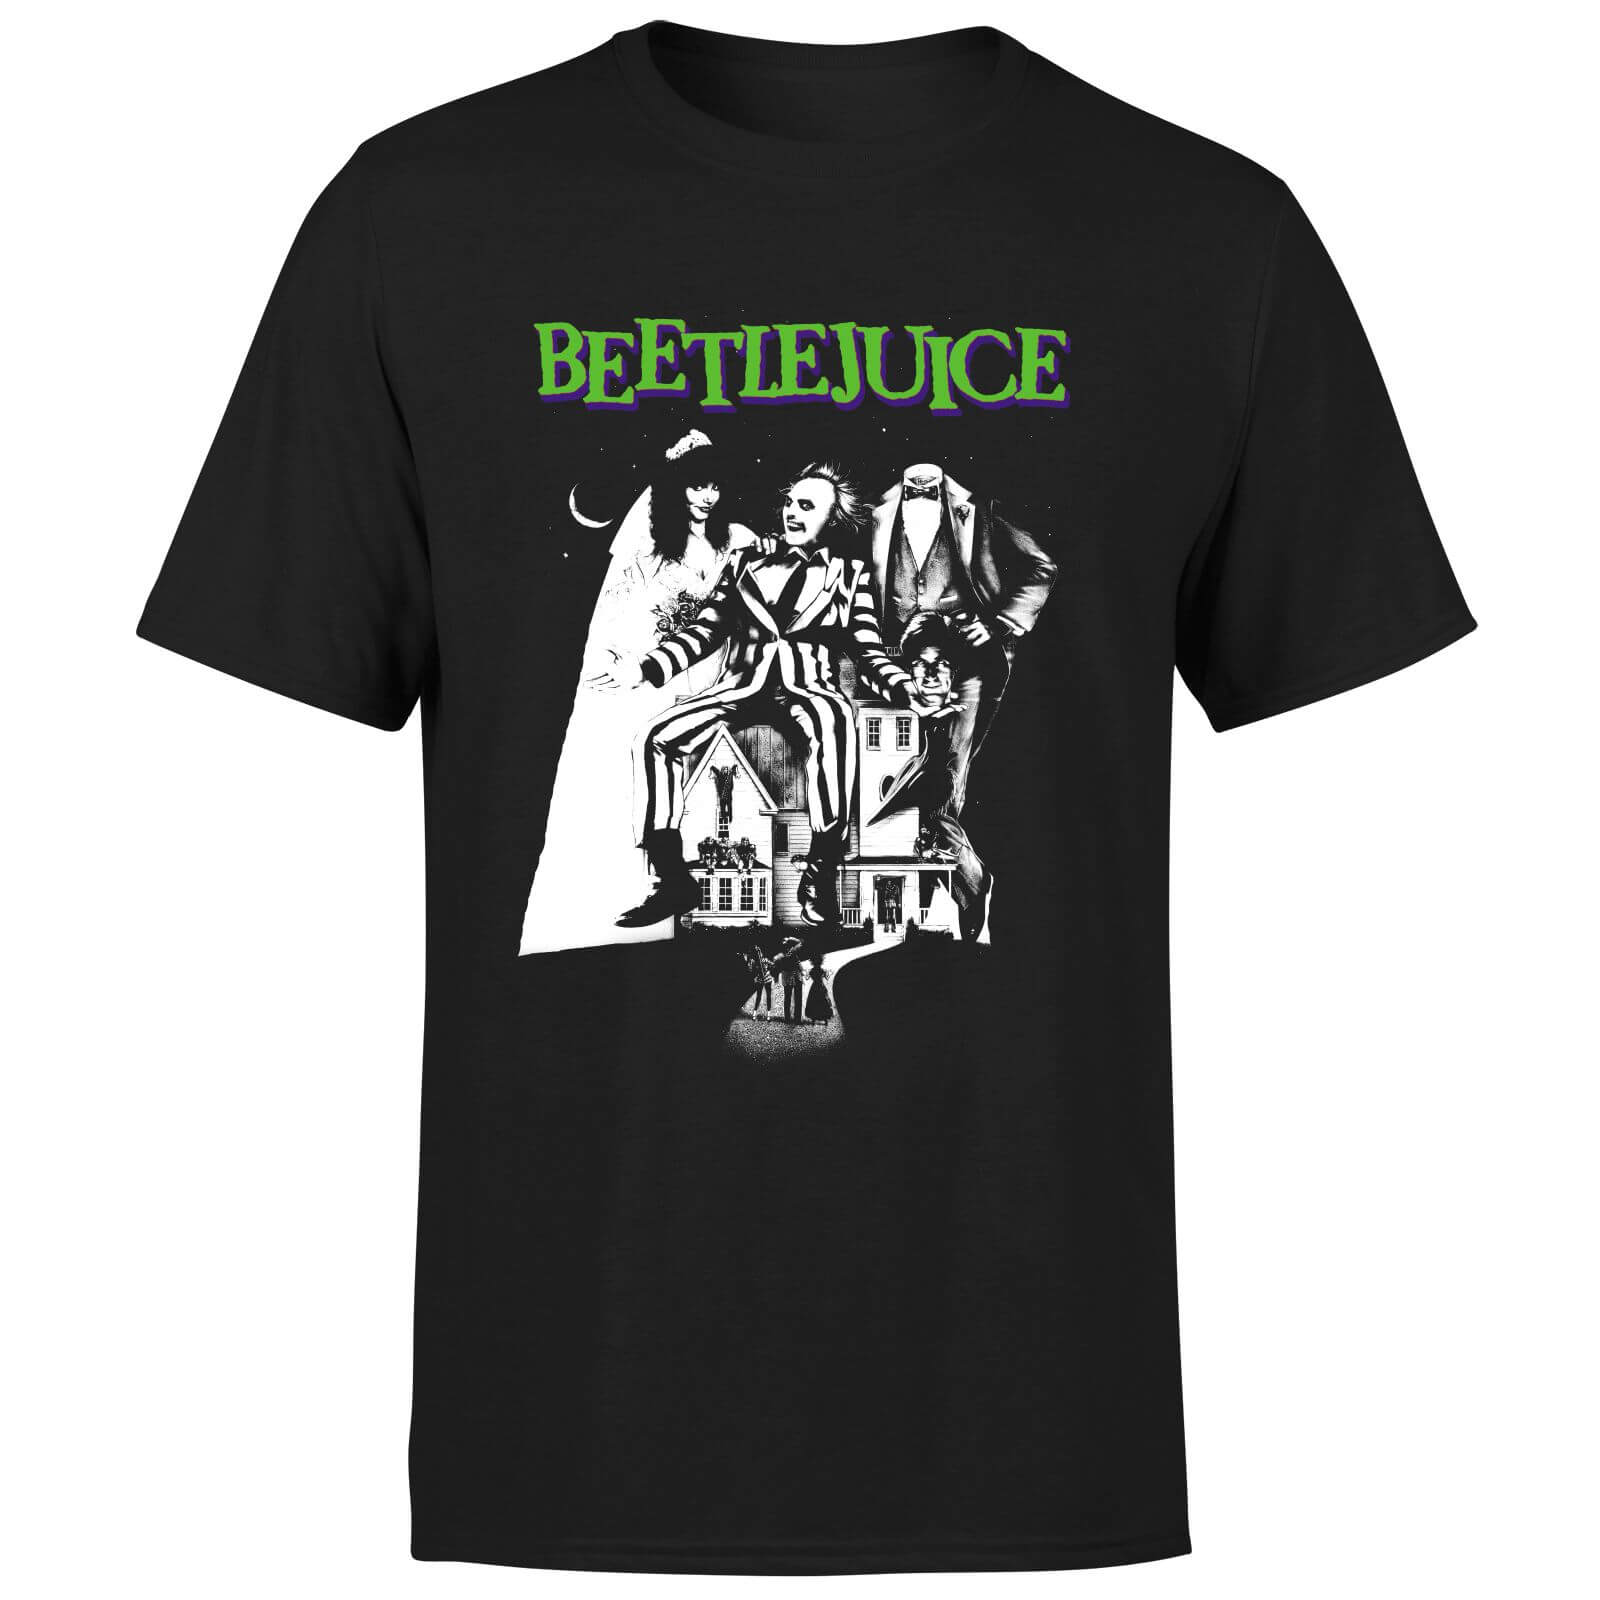 Beetlejuice Mono Poster T-Shirt - Black - L